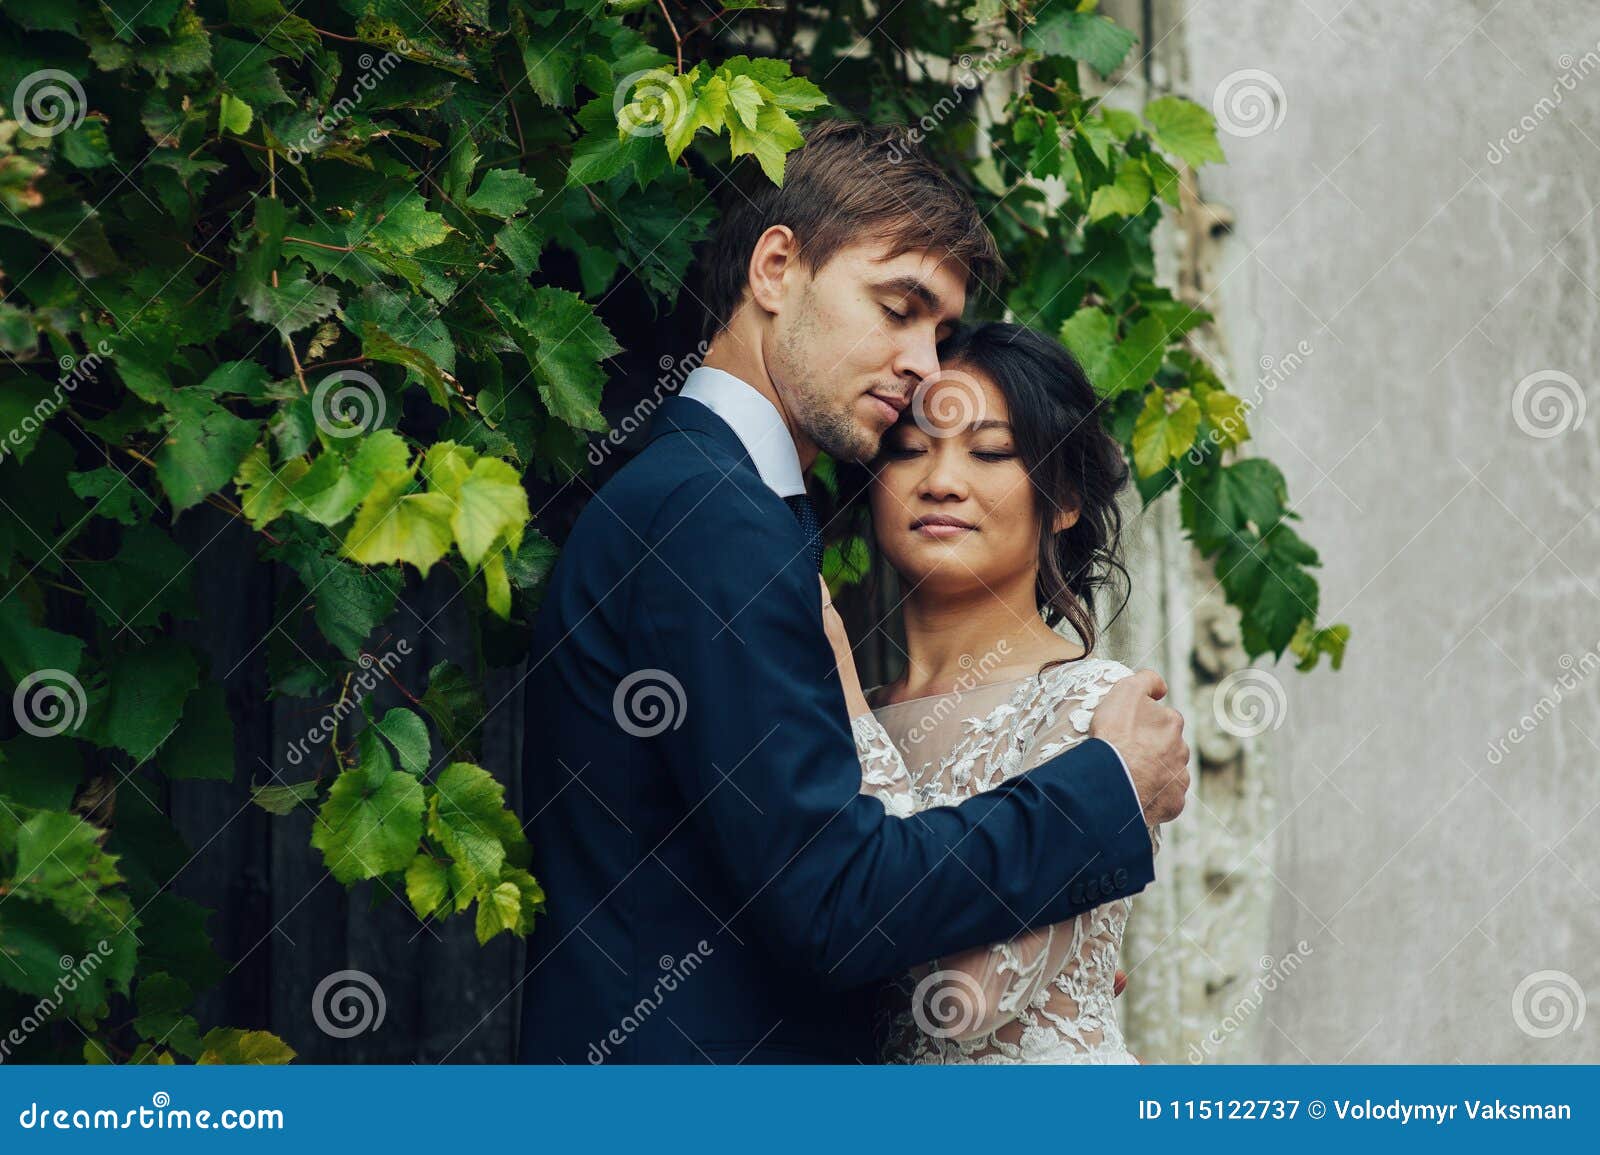 https://thumbs.dreamstime.com/z/sensual-married-couple-valentines-hugging-front-old-slavi-portrait-elegant-asian-bride-hugging-groom-115122737.jpg